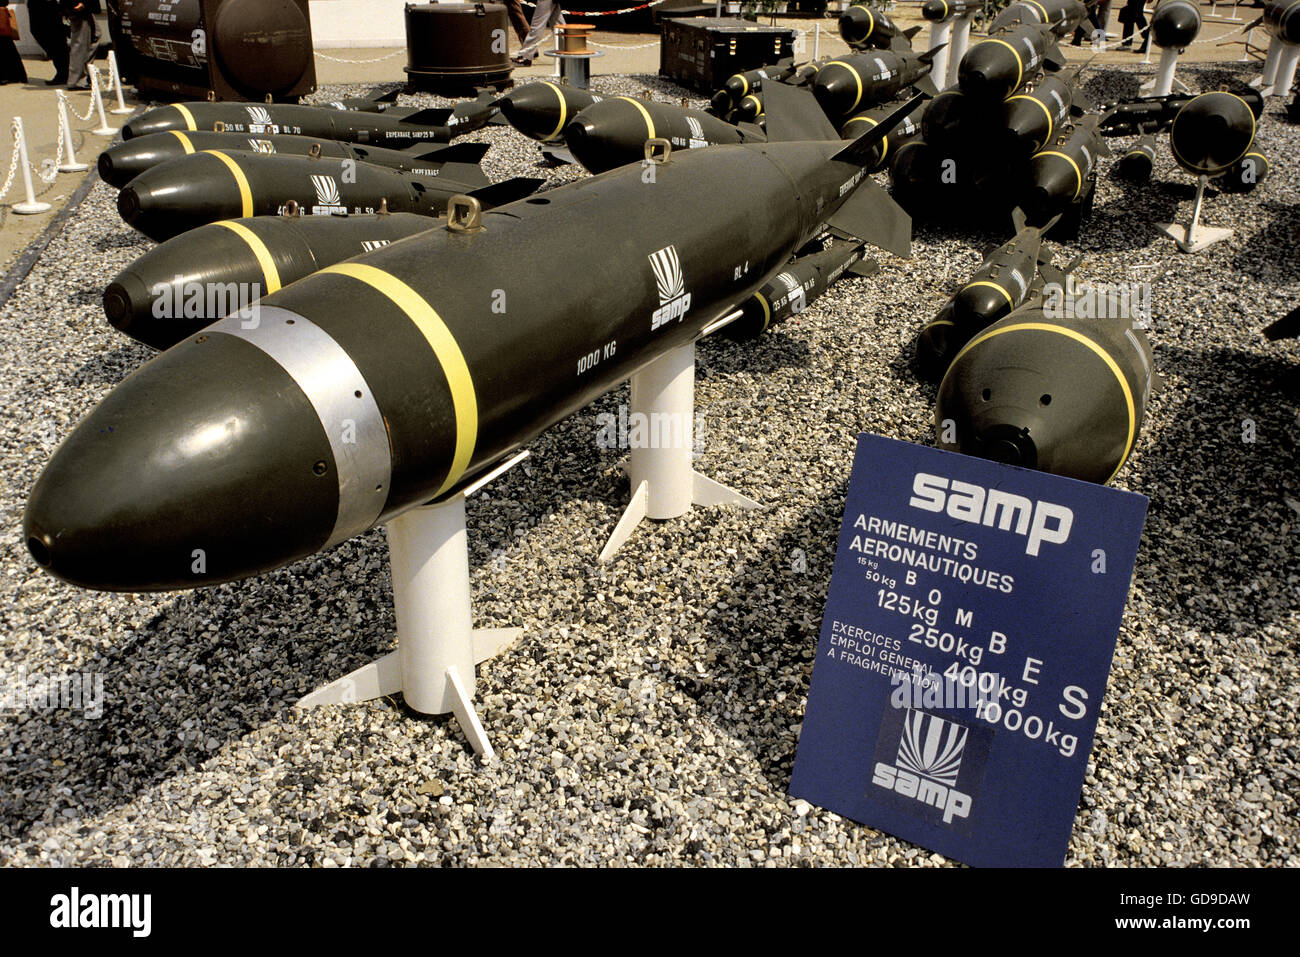 SAMP (Societe des Atelier Mecaniques) munizioni bomba Foto Stock